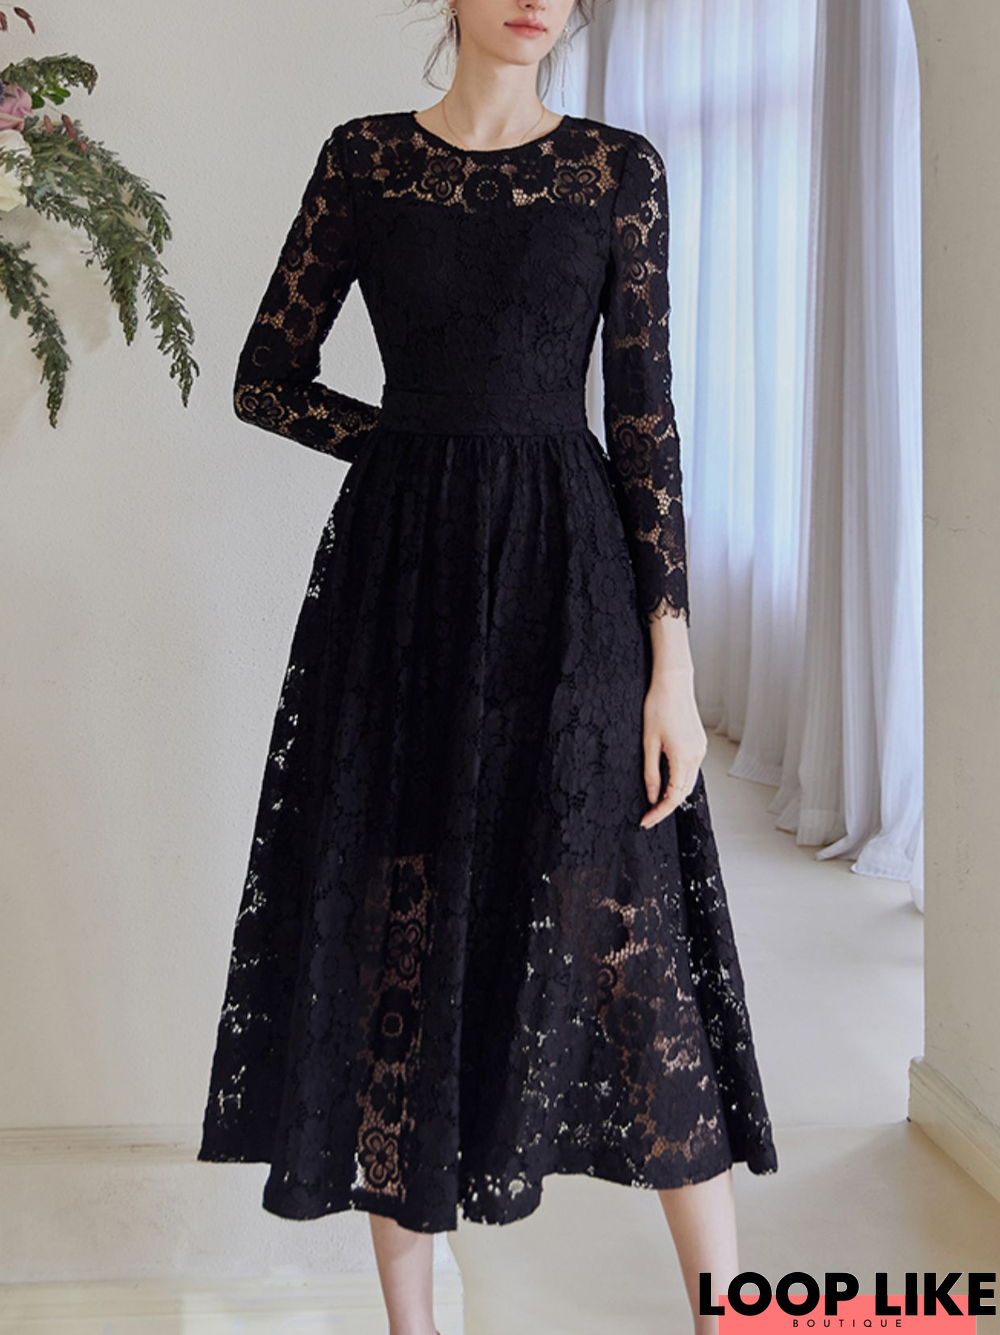 Elegant Black Lace Cocktail Dress